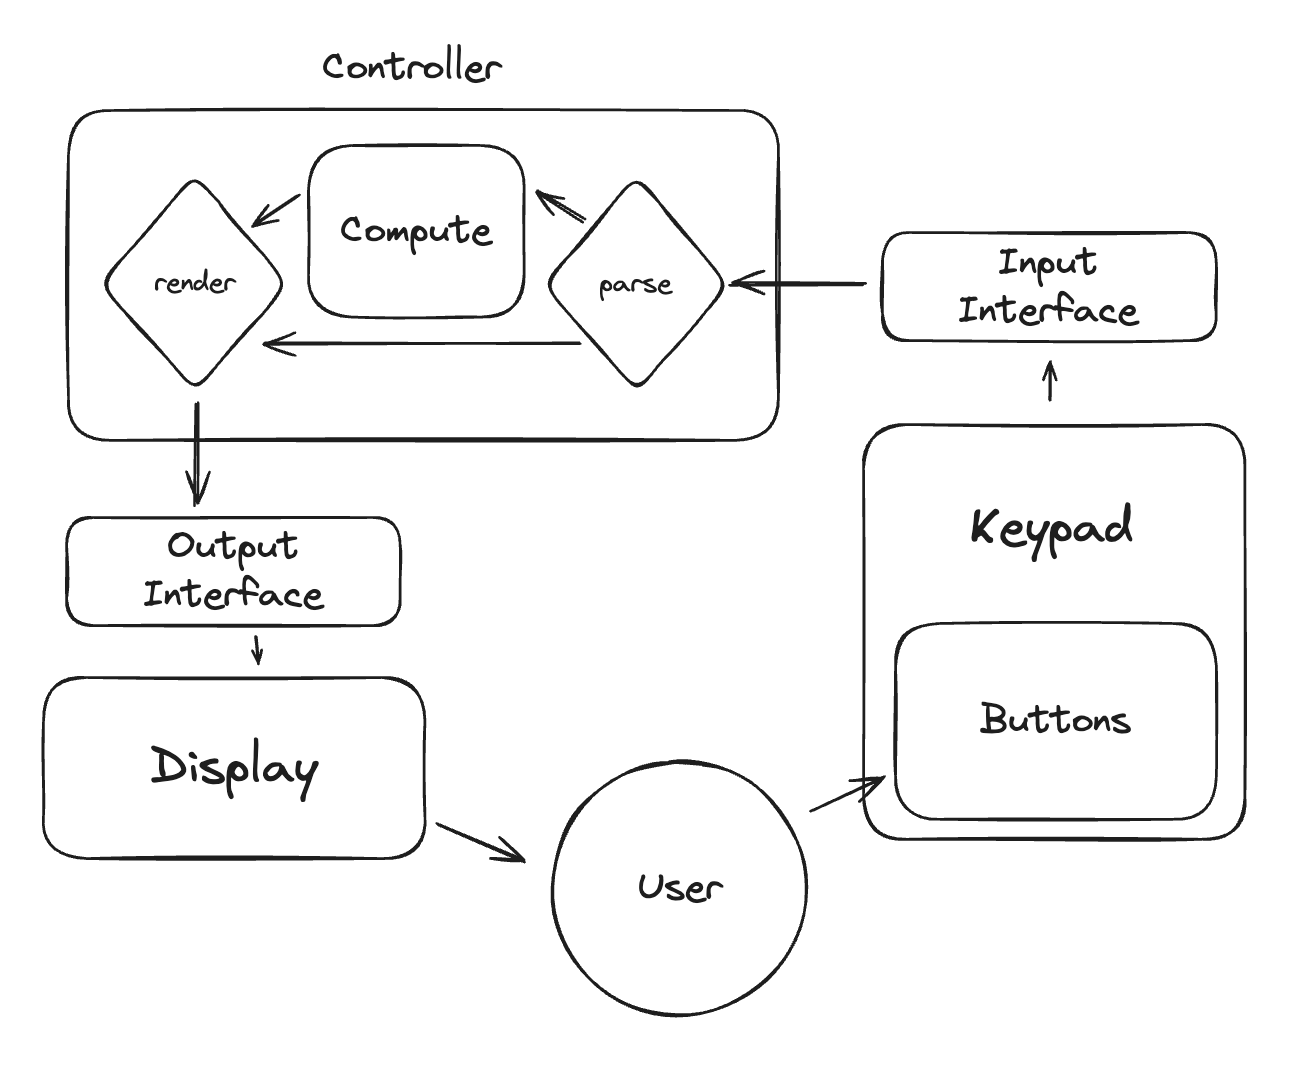 Controller의 parse, compute, render 과정을 추가한 도표